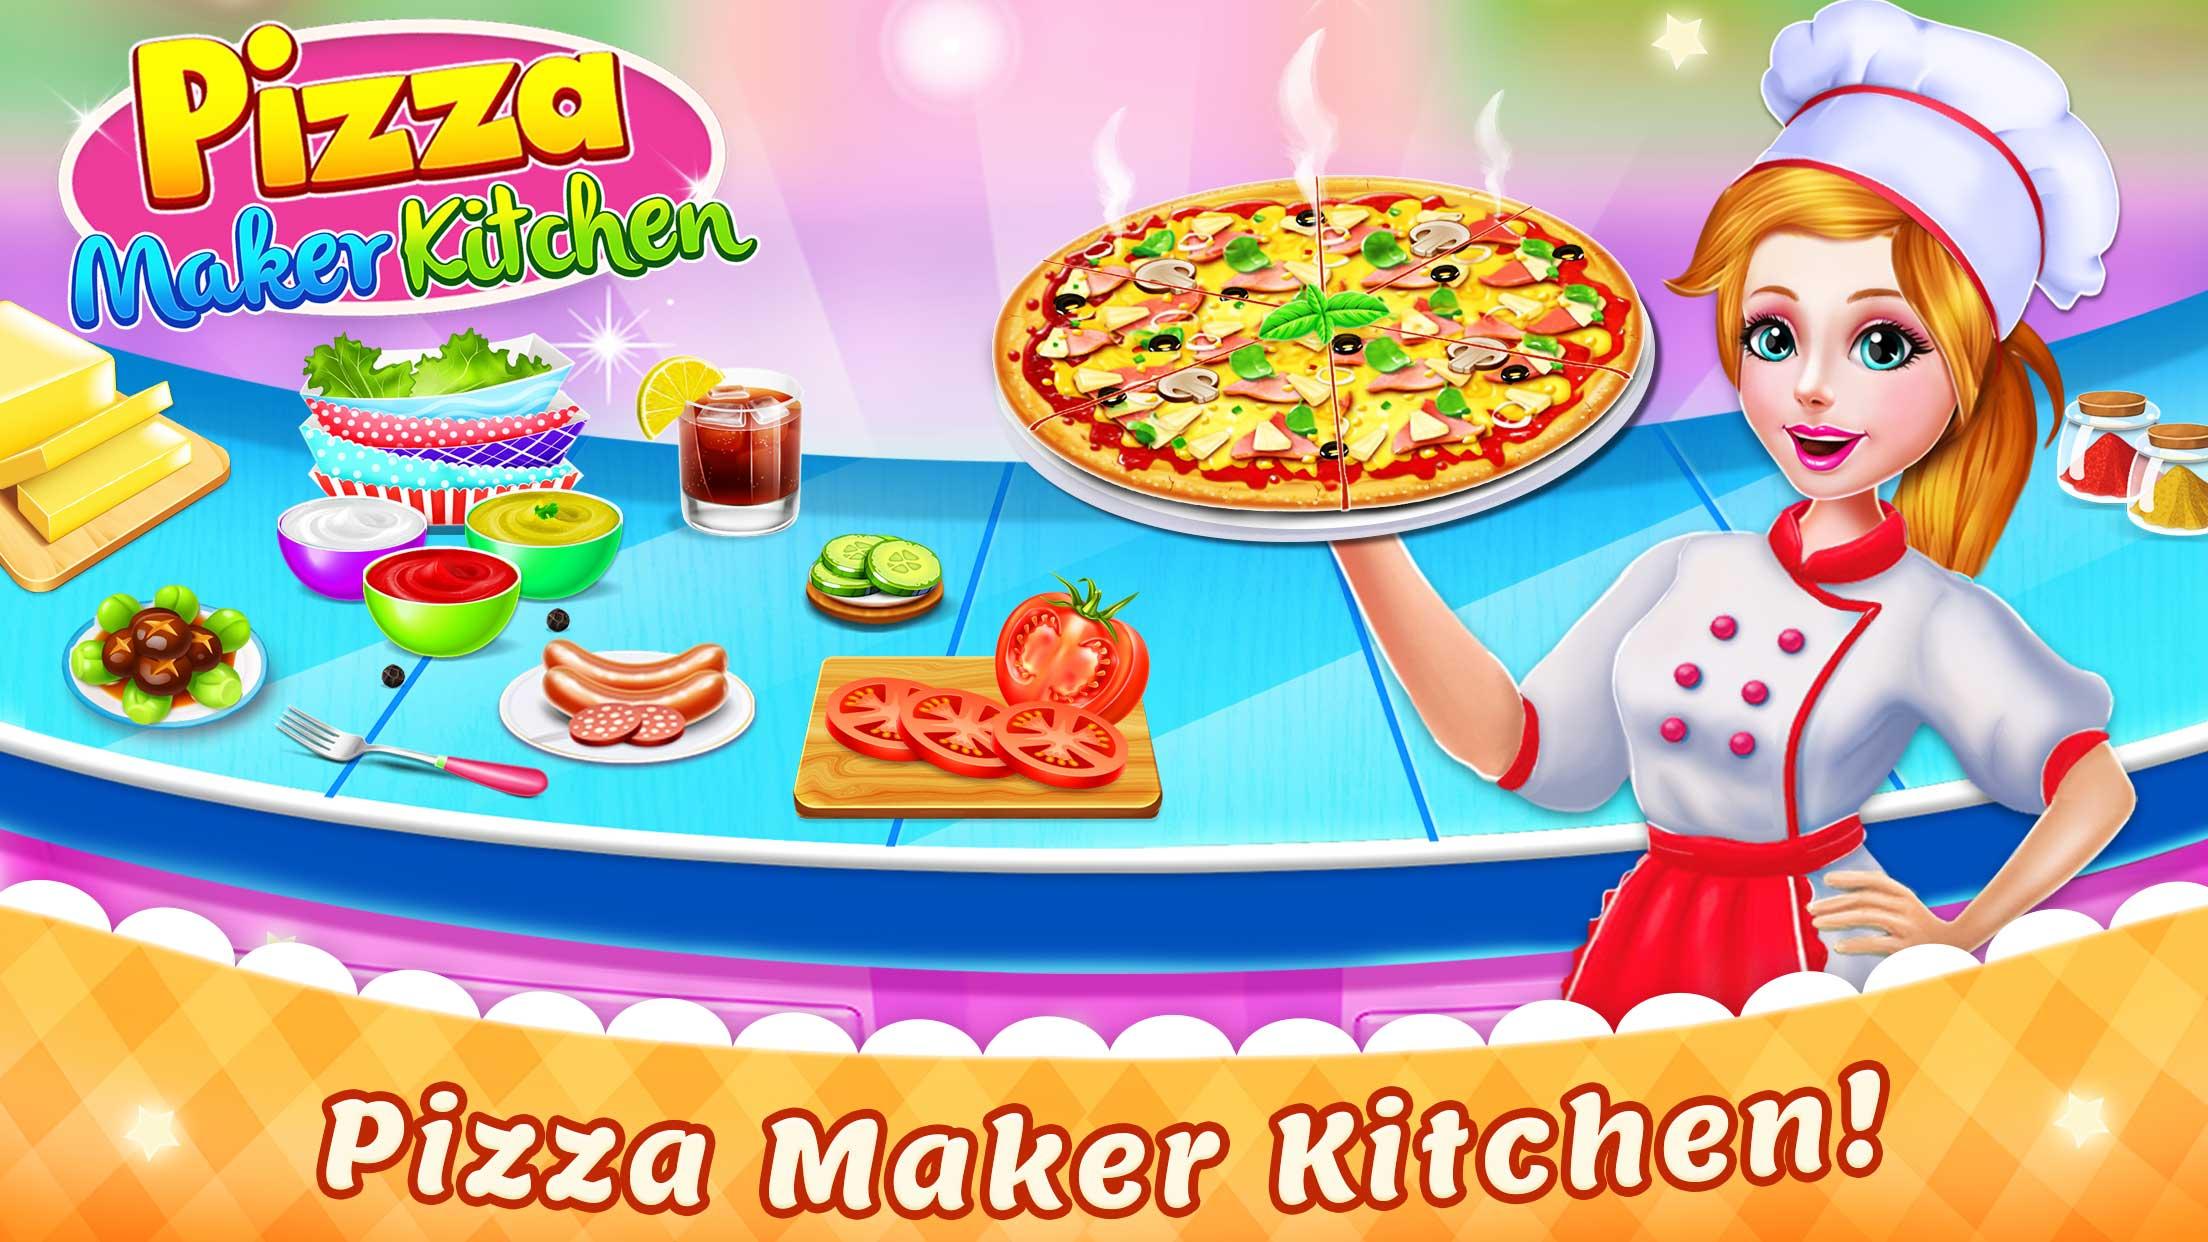 Игру пицца хотите. Игра пицца. Игры для девочек пицца. Pizza maker игра. Мини игра пиццерия.